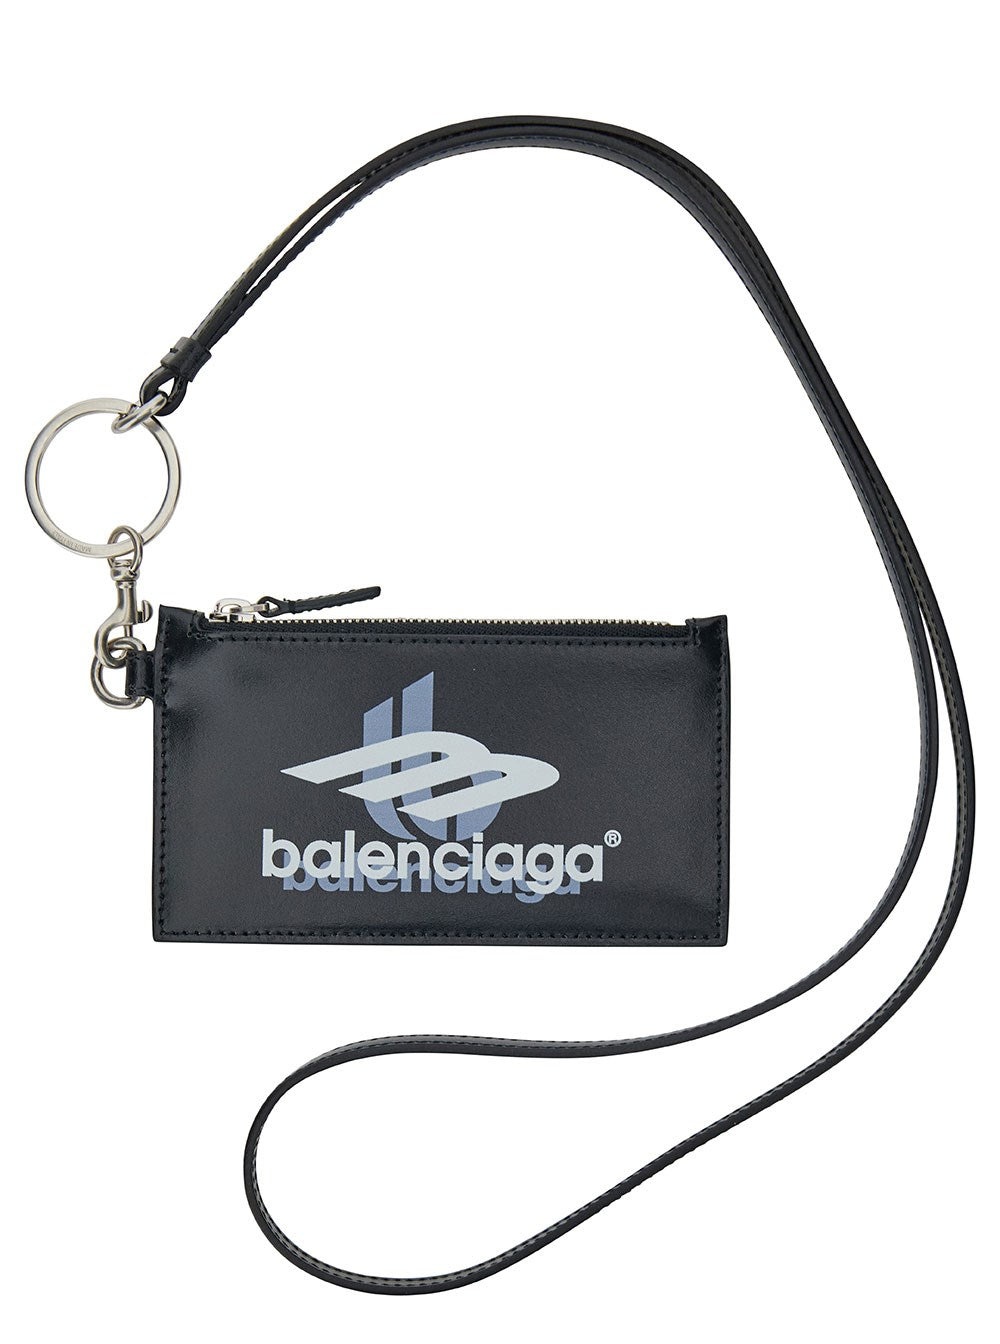 Balenciaga logo card case with key chain - 1